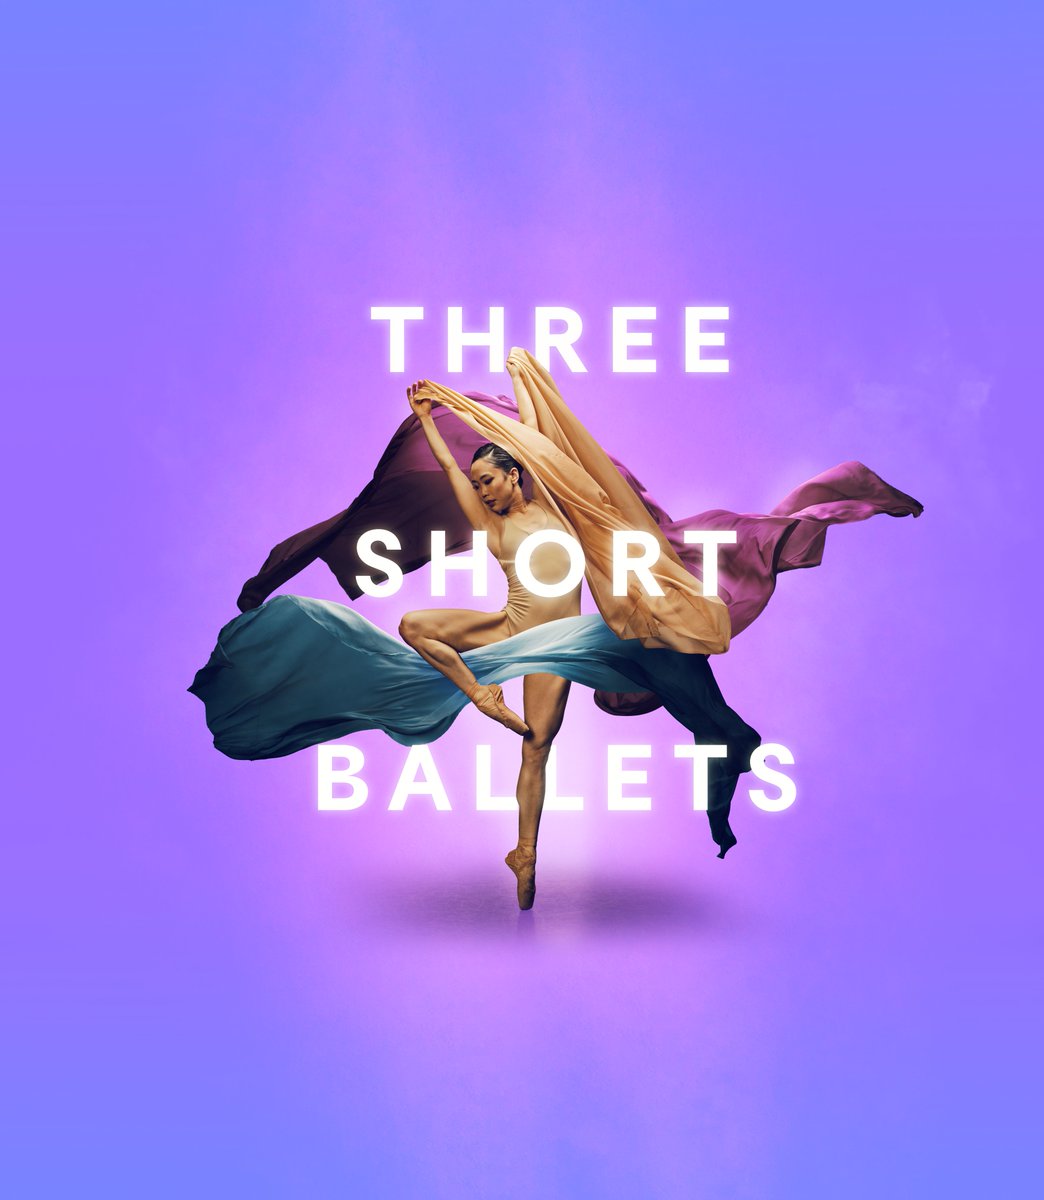 Three Short Ballets at the Stanley & Audrey Burton Theatre is on sale now! Book now: northernballet.com/three-short-ba…